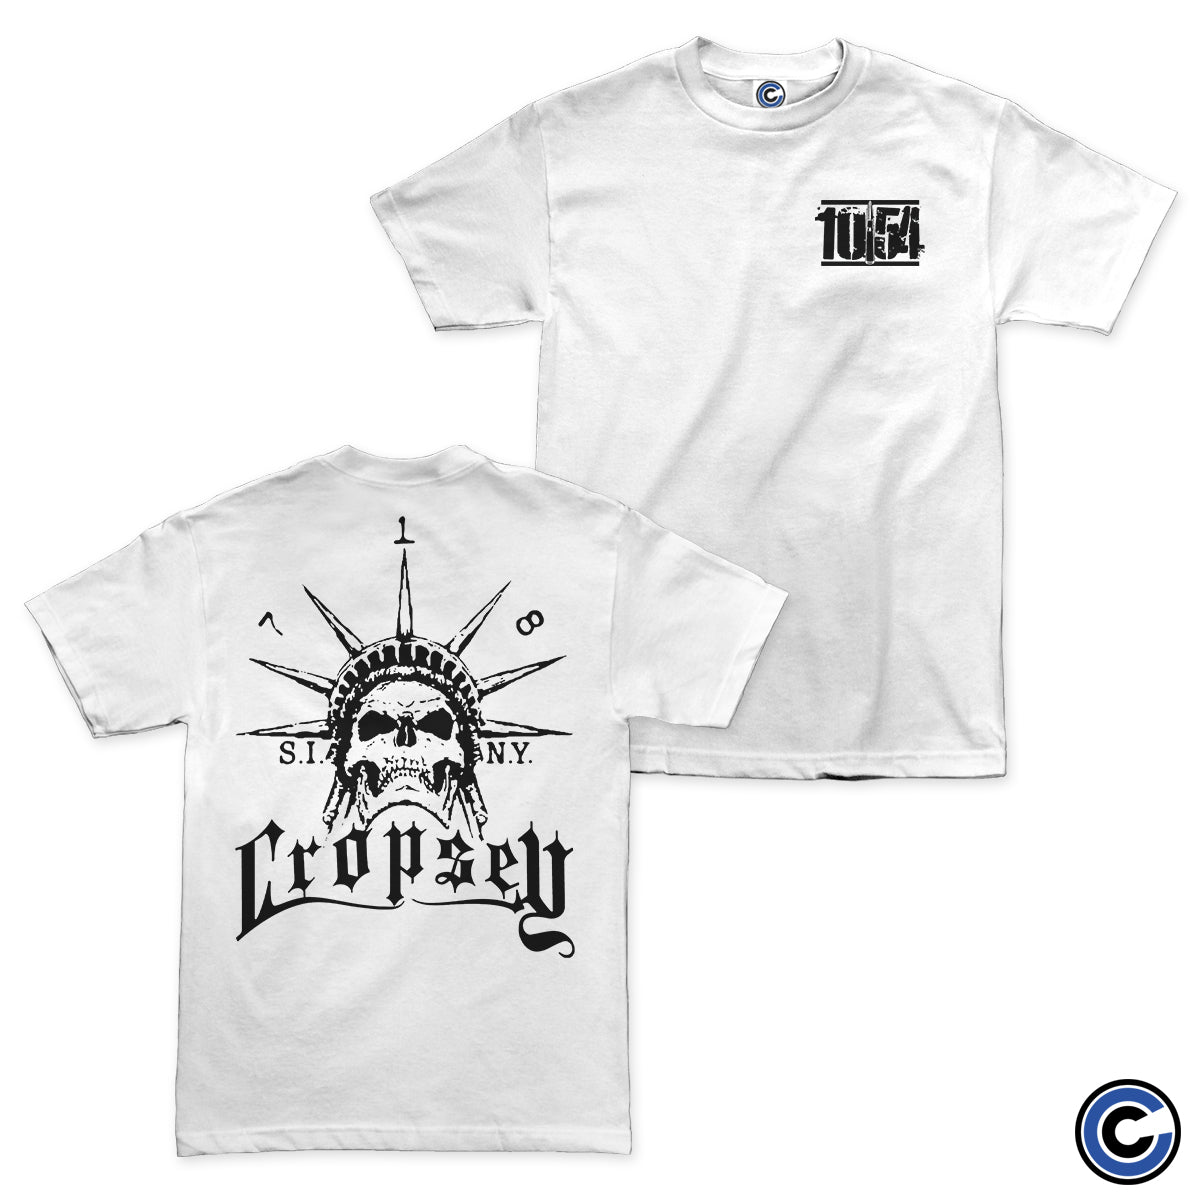 Cropsey "Liberty" Shirt